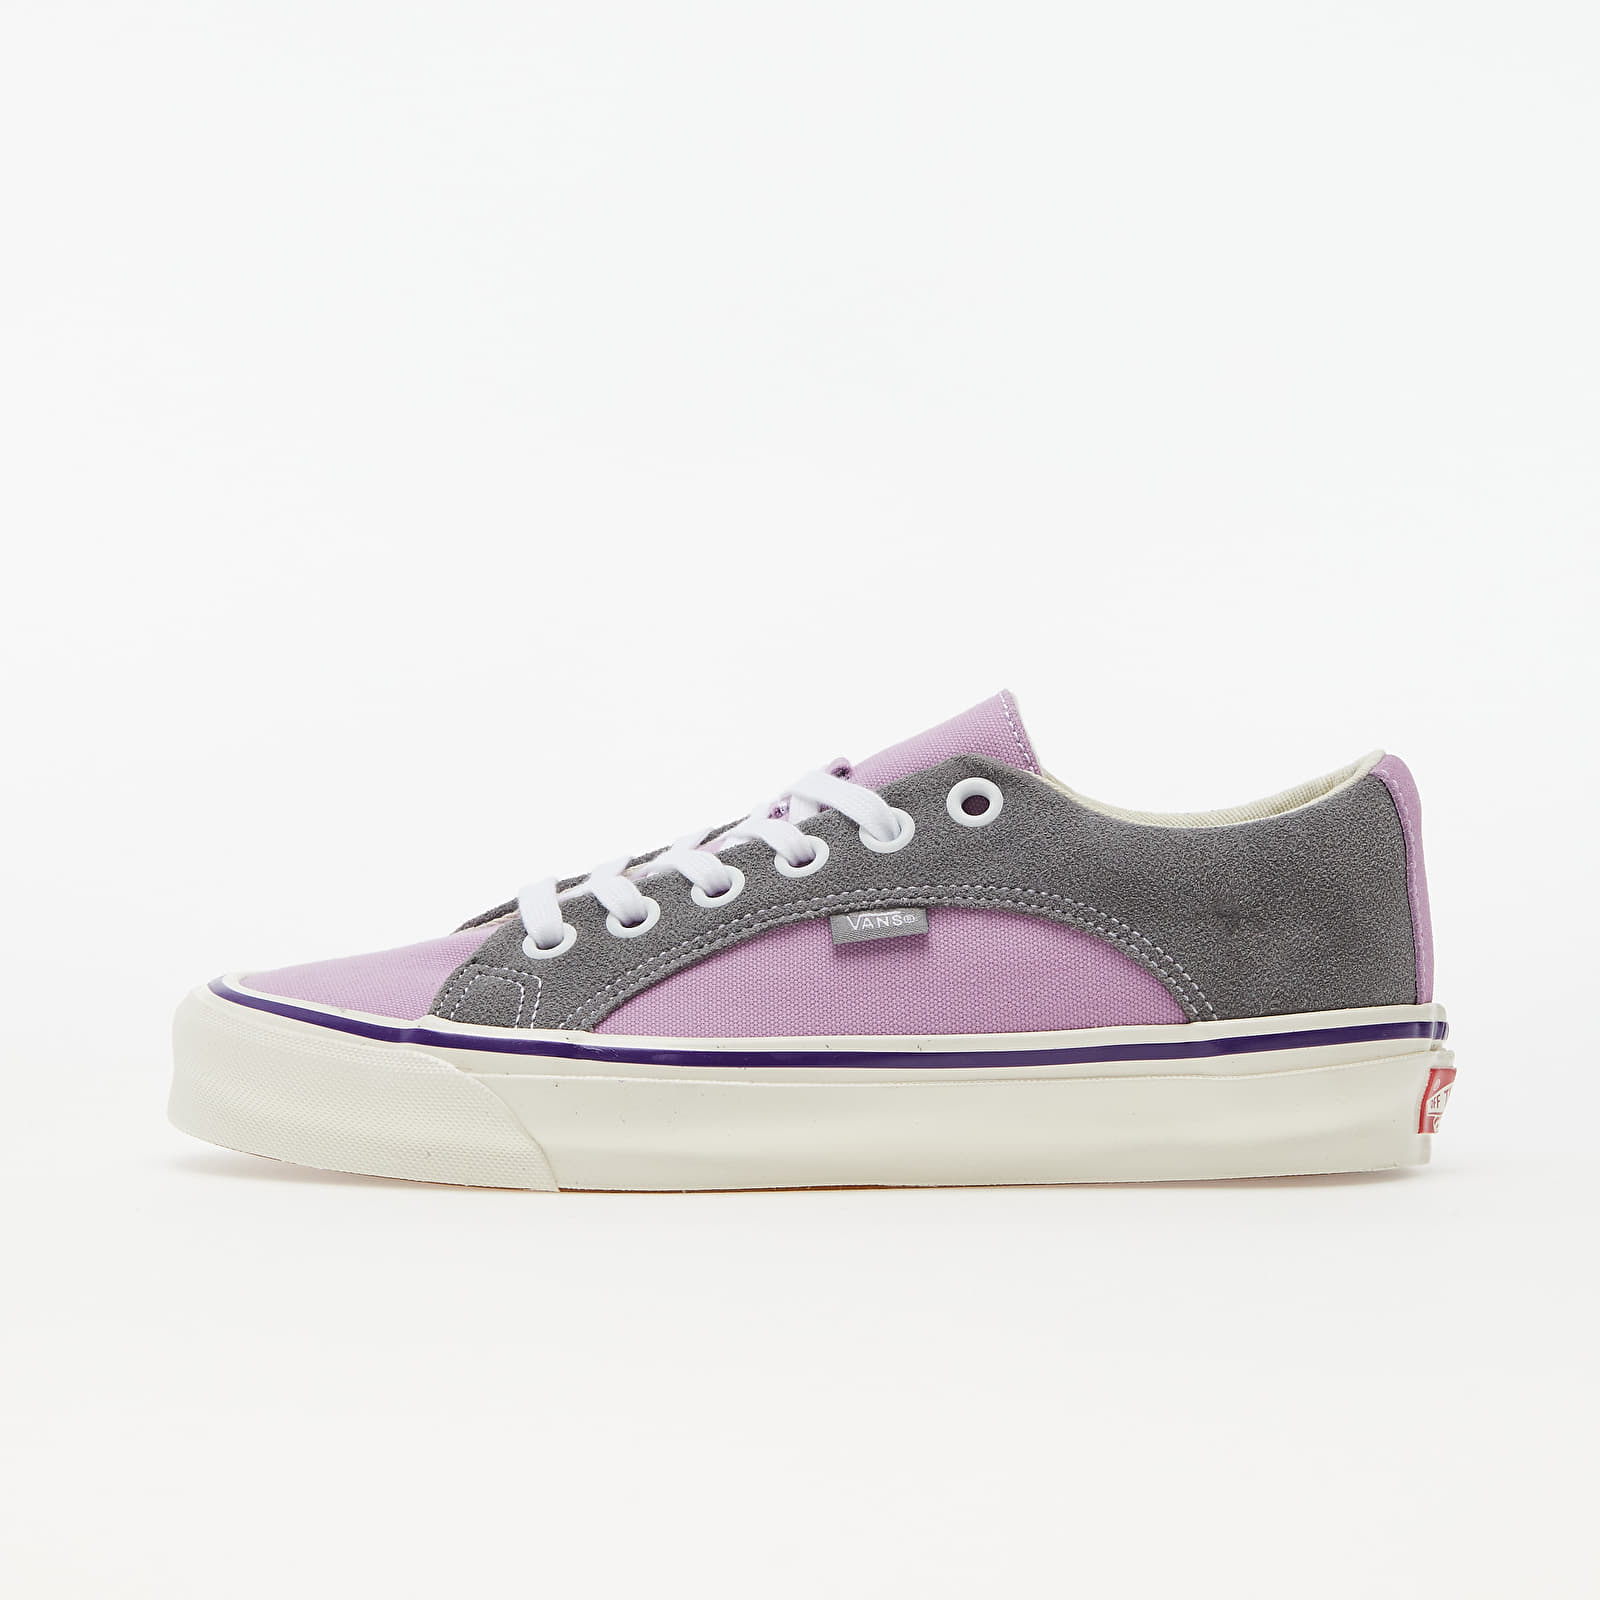 Chaussures et baskets homme Vans Vault OG Lampin LX (Suede/ Canvas) Grey/ Purple